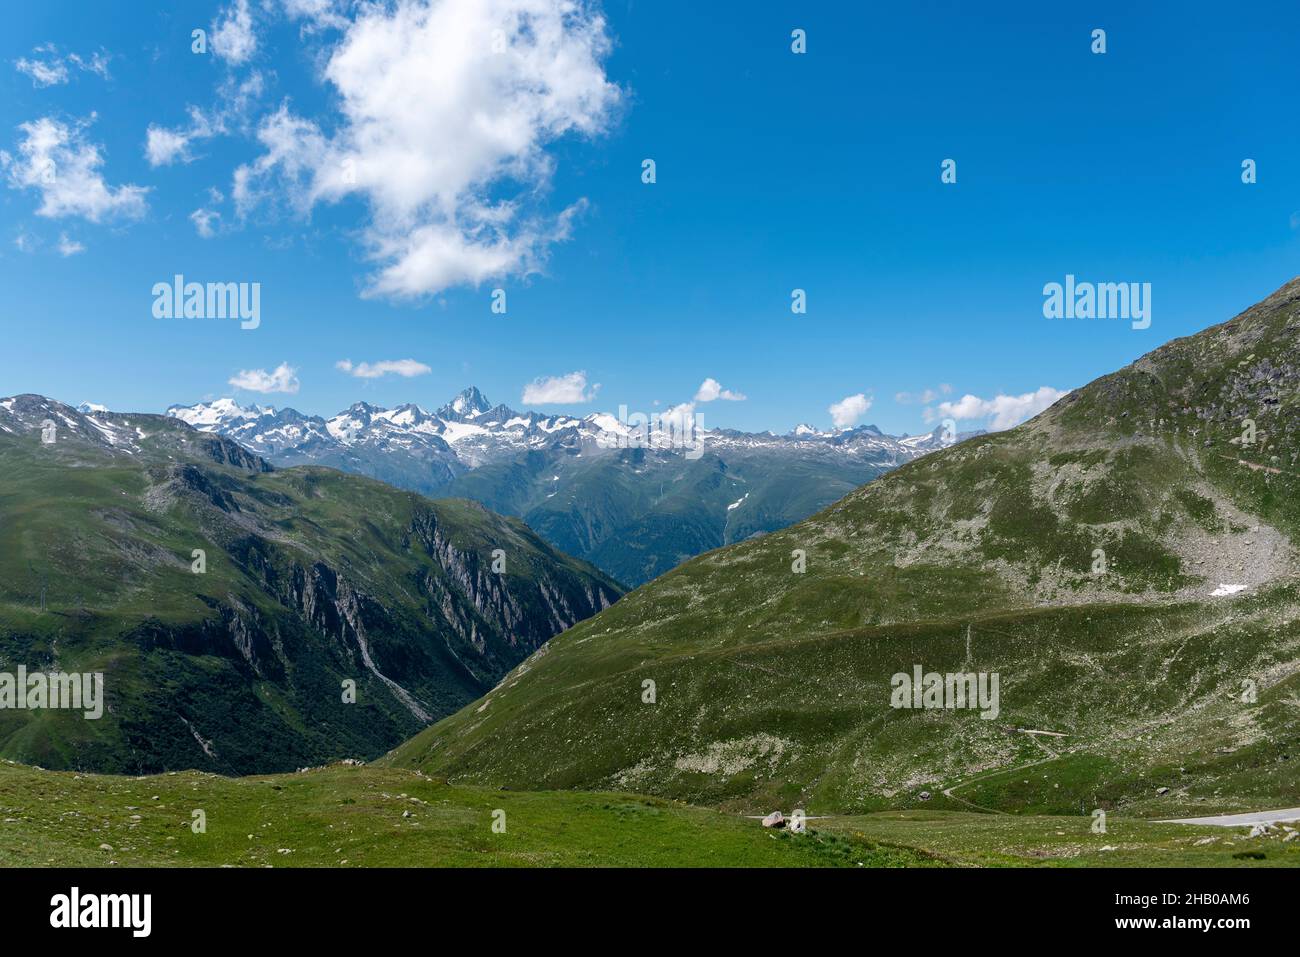 Alpine landscape from the Nufenen Pass with the mountain Finsteraarhorn, Ulrichen, Valais, Switzerland, Europe Stock Photo